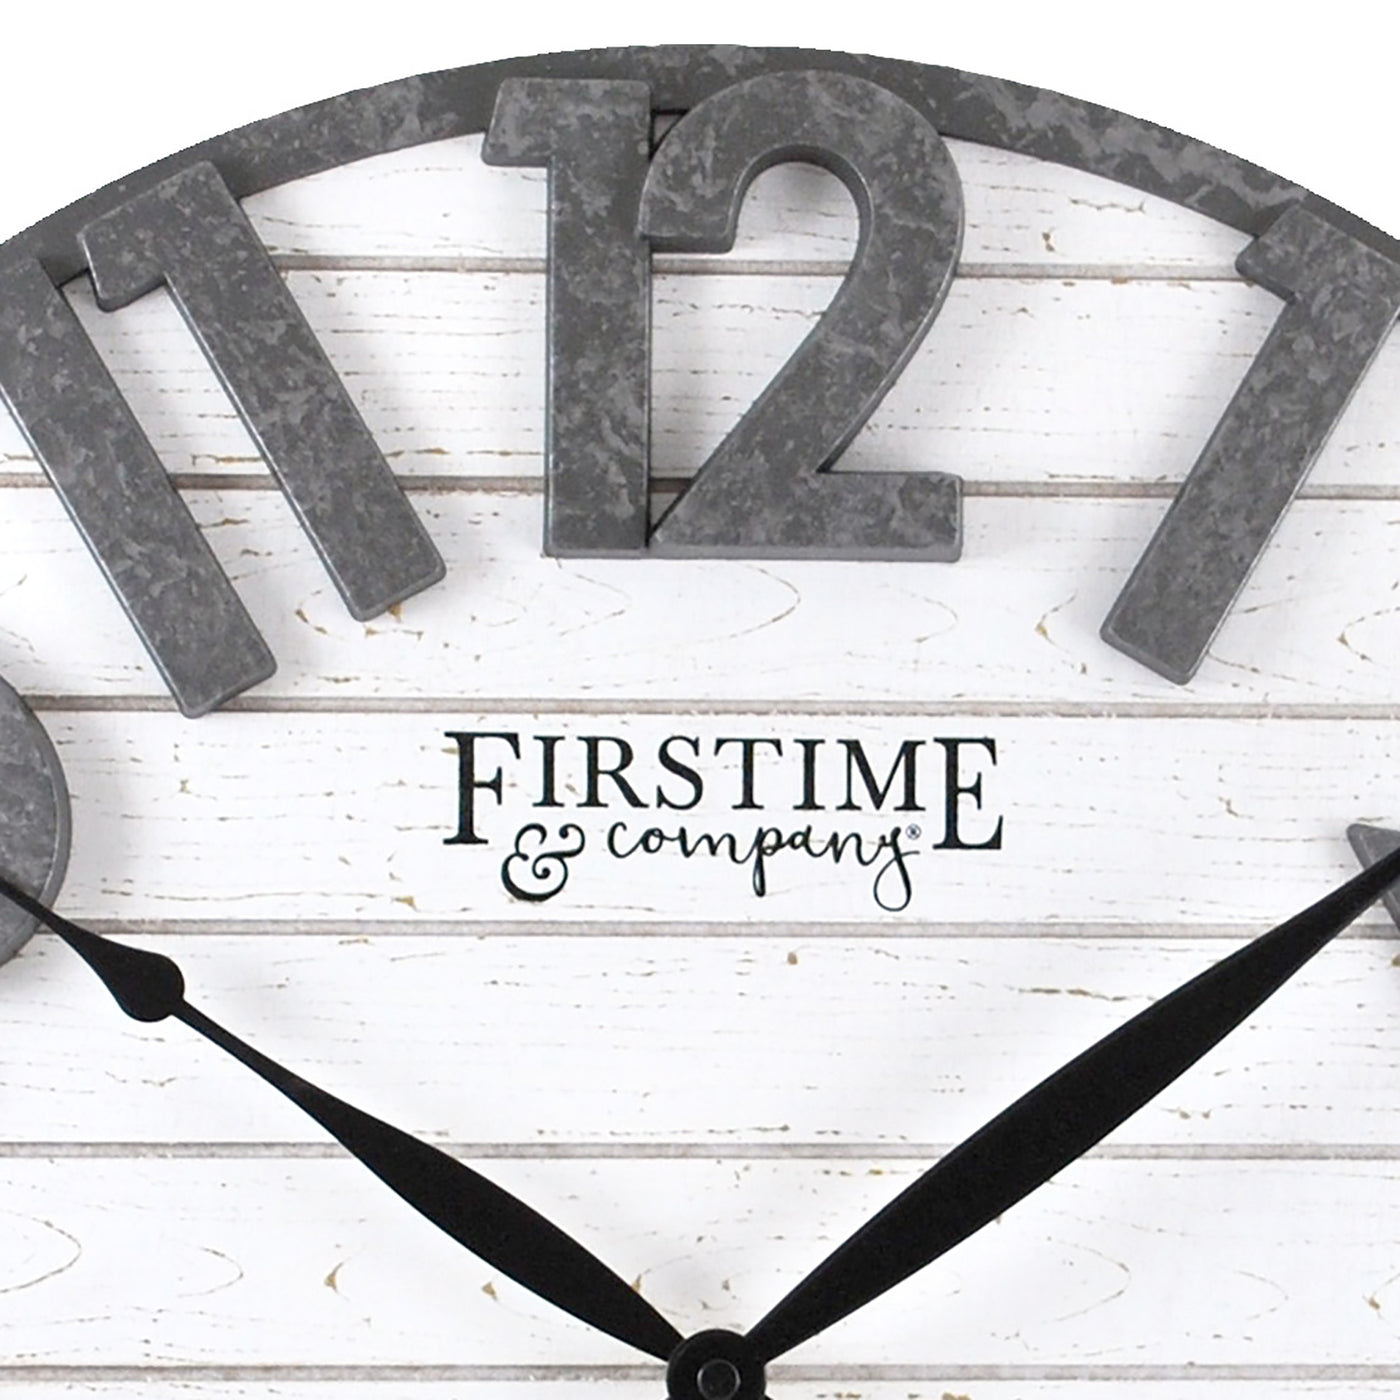 FirsTime & Co. Dark Silver Sawyer Shiplap Wall Clock, Farmhouse Style, Made of Wood